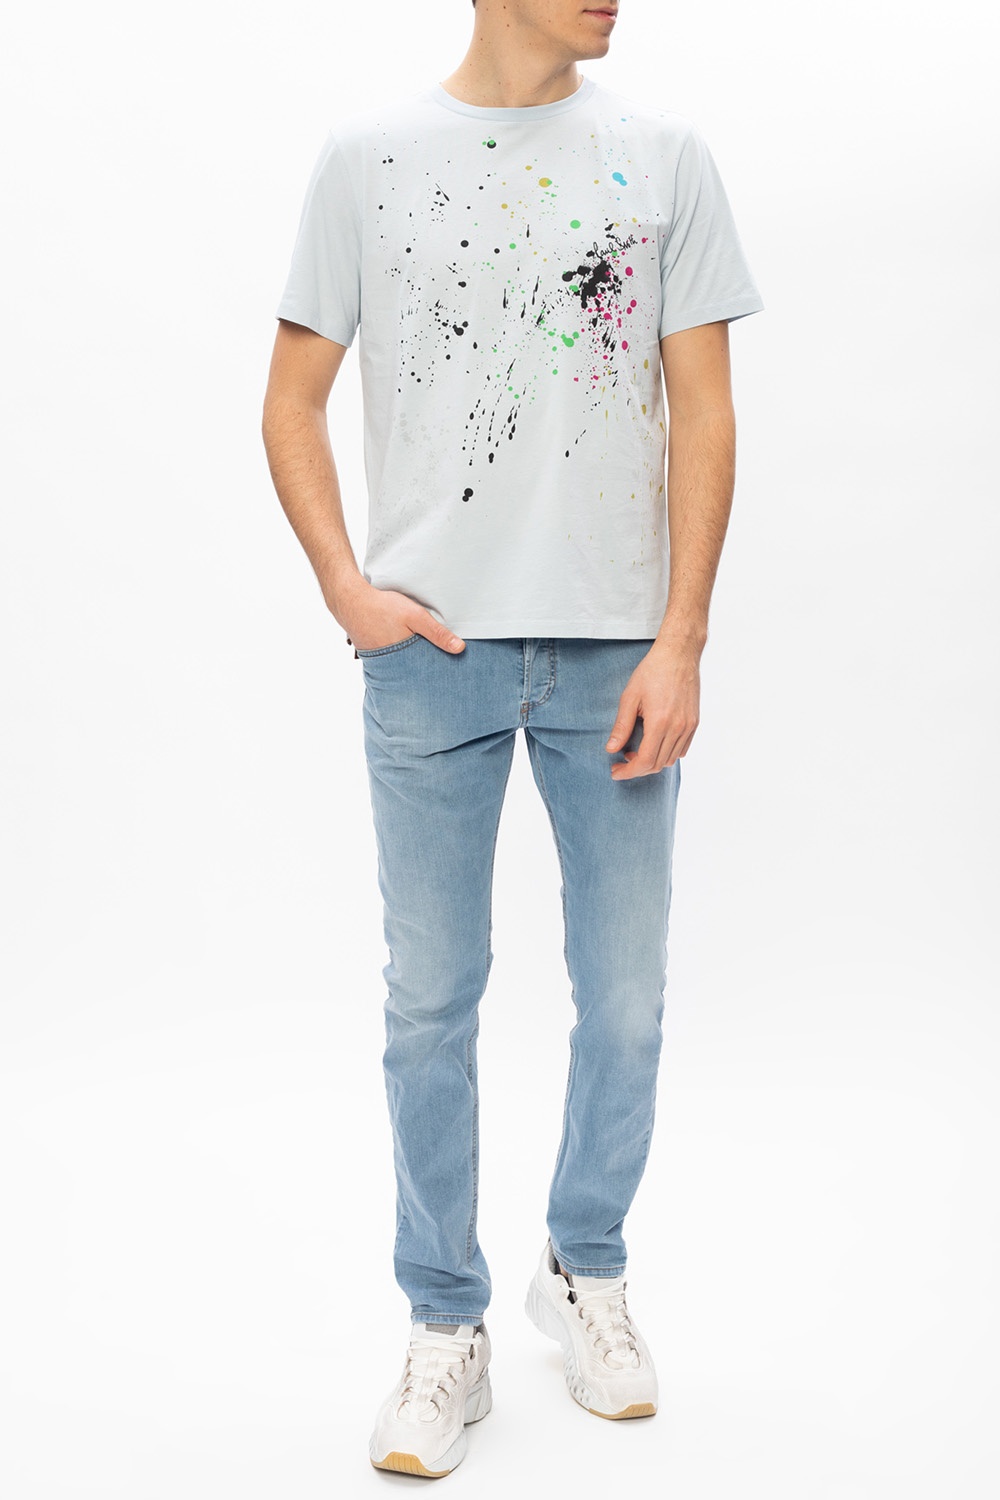 Paul Smith T-shirt with logo | Men's Clothing | Vitkac